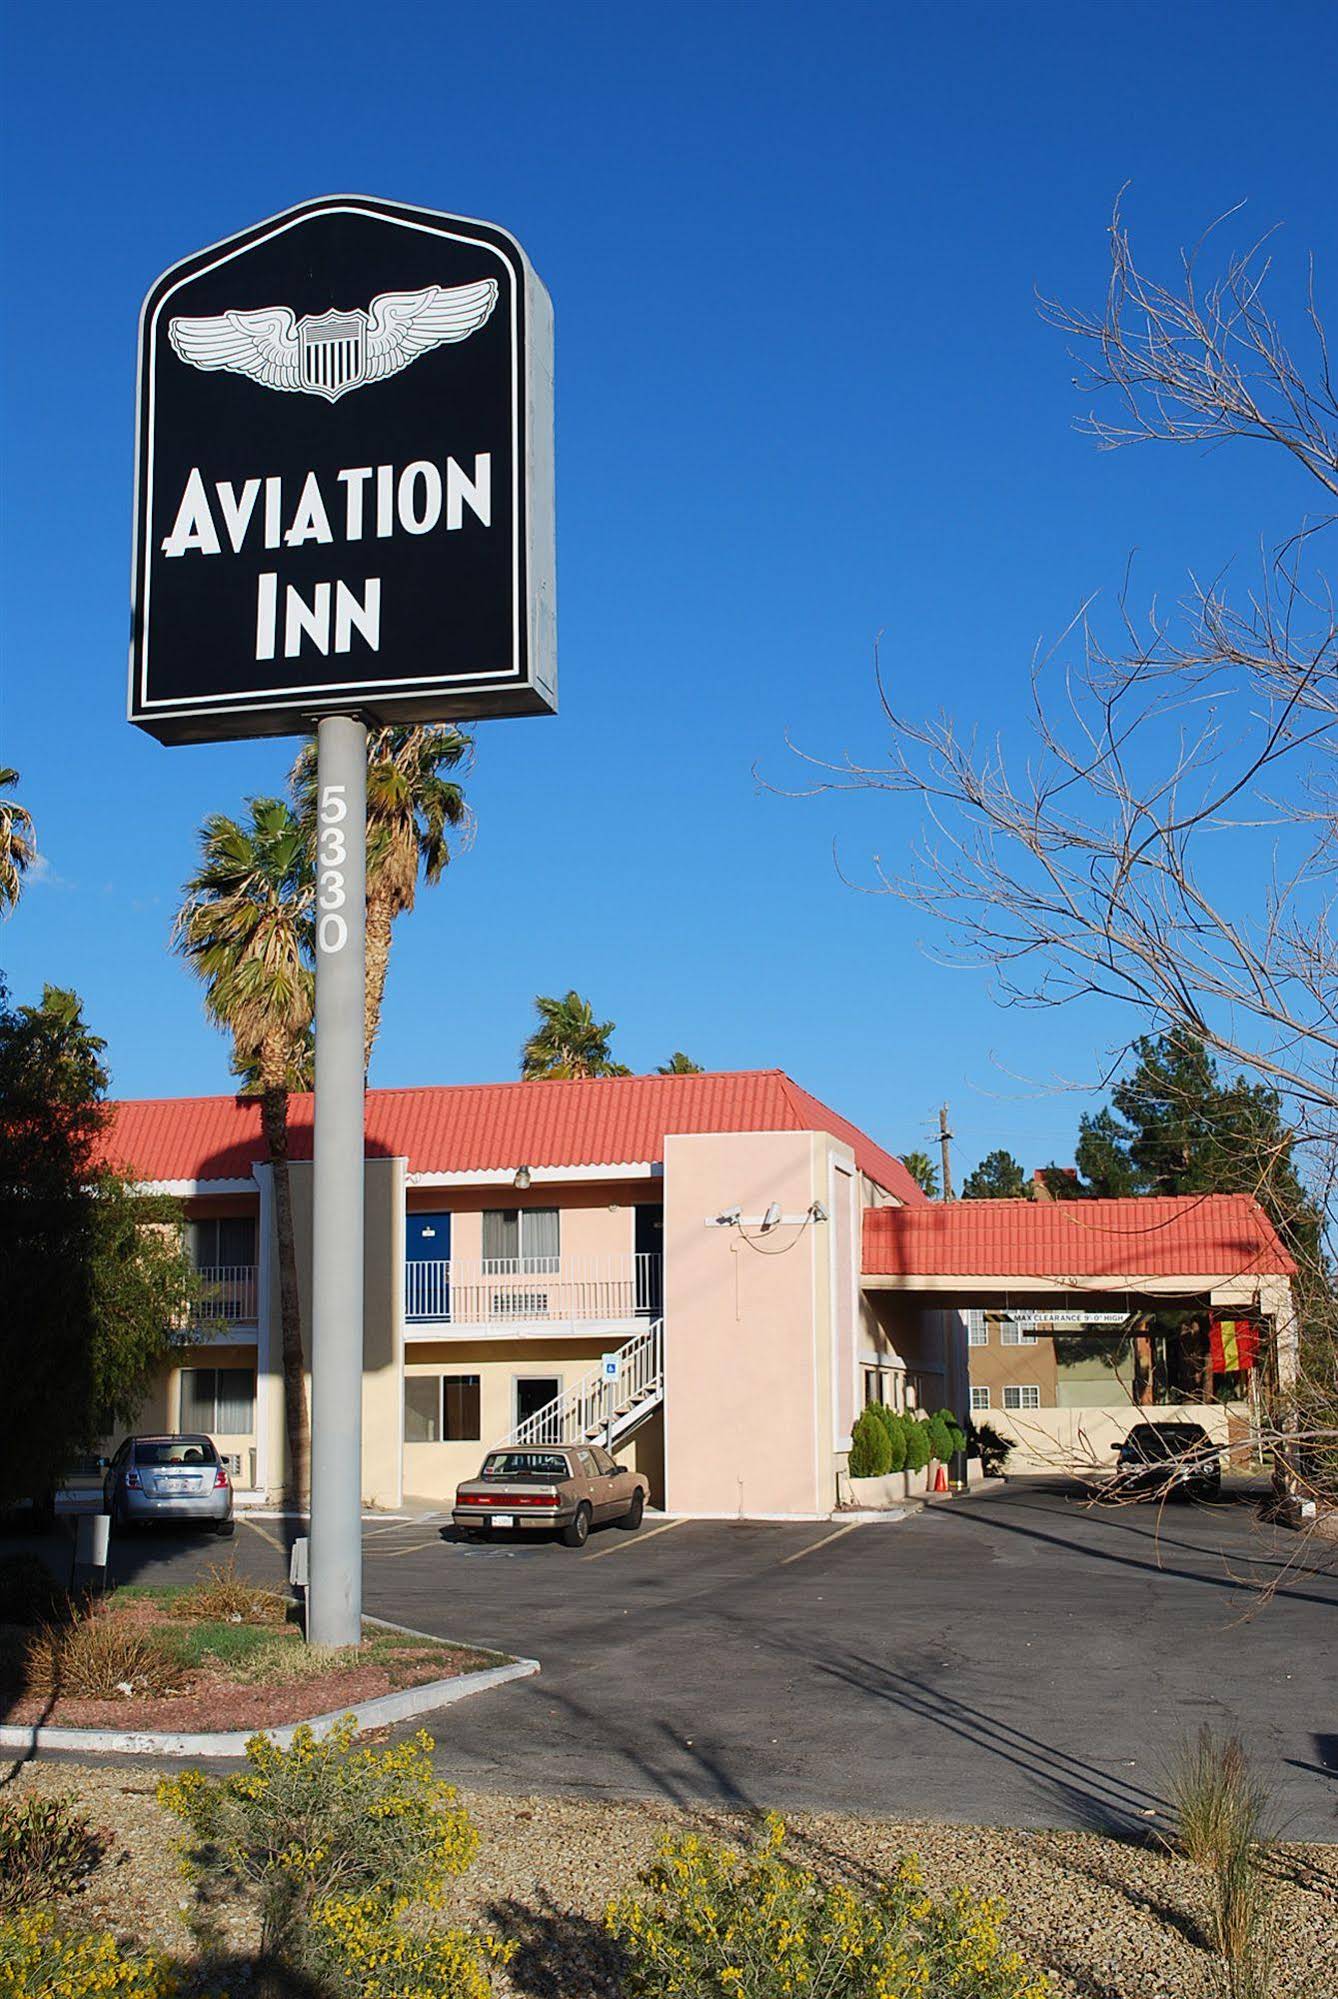 Aviation Inn